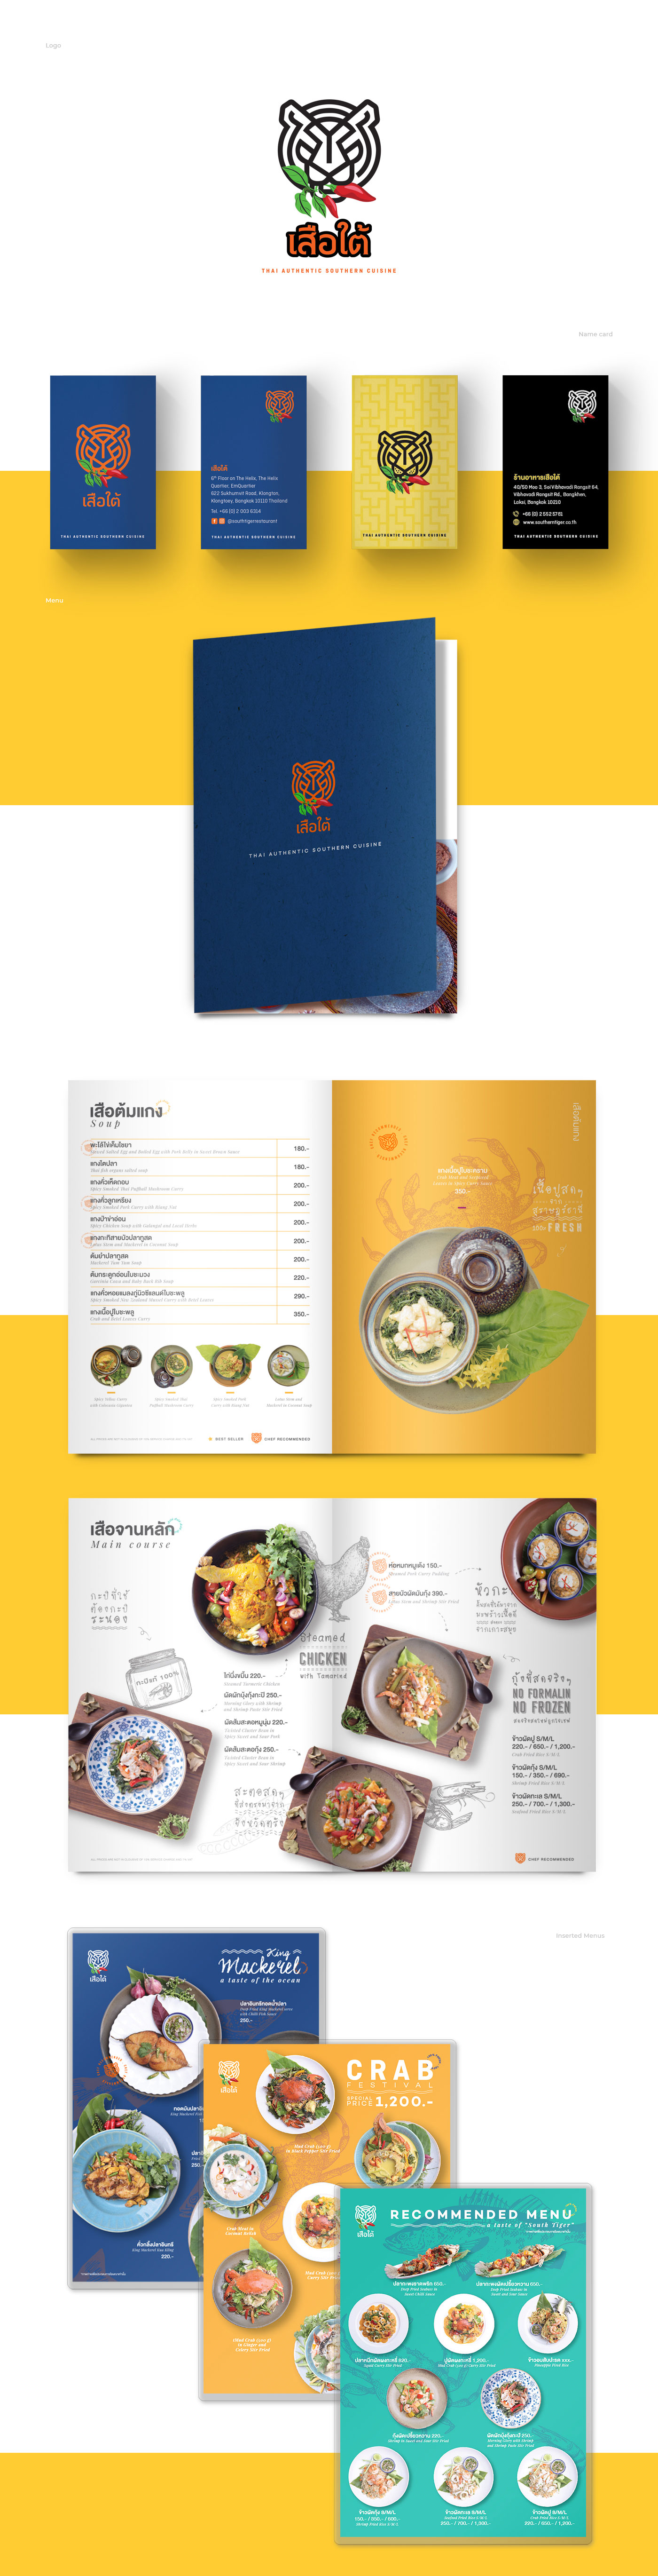 Restaurant_print_design